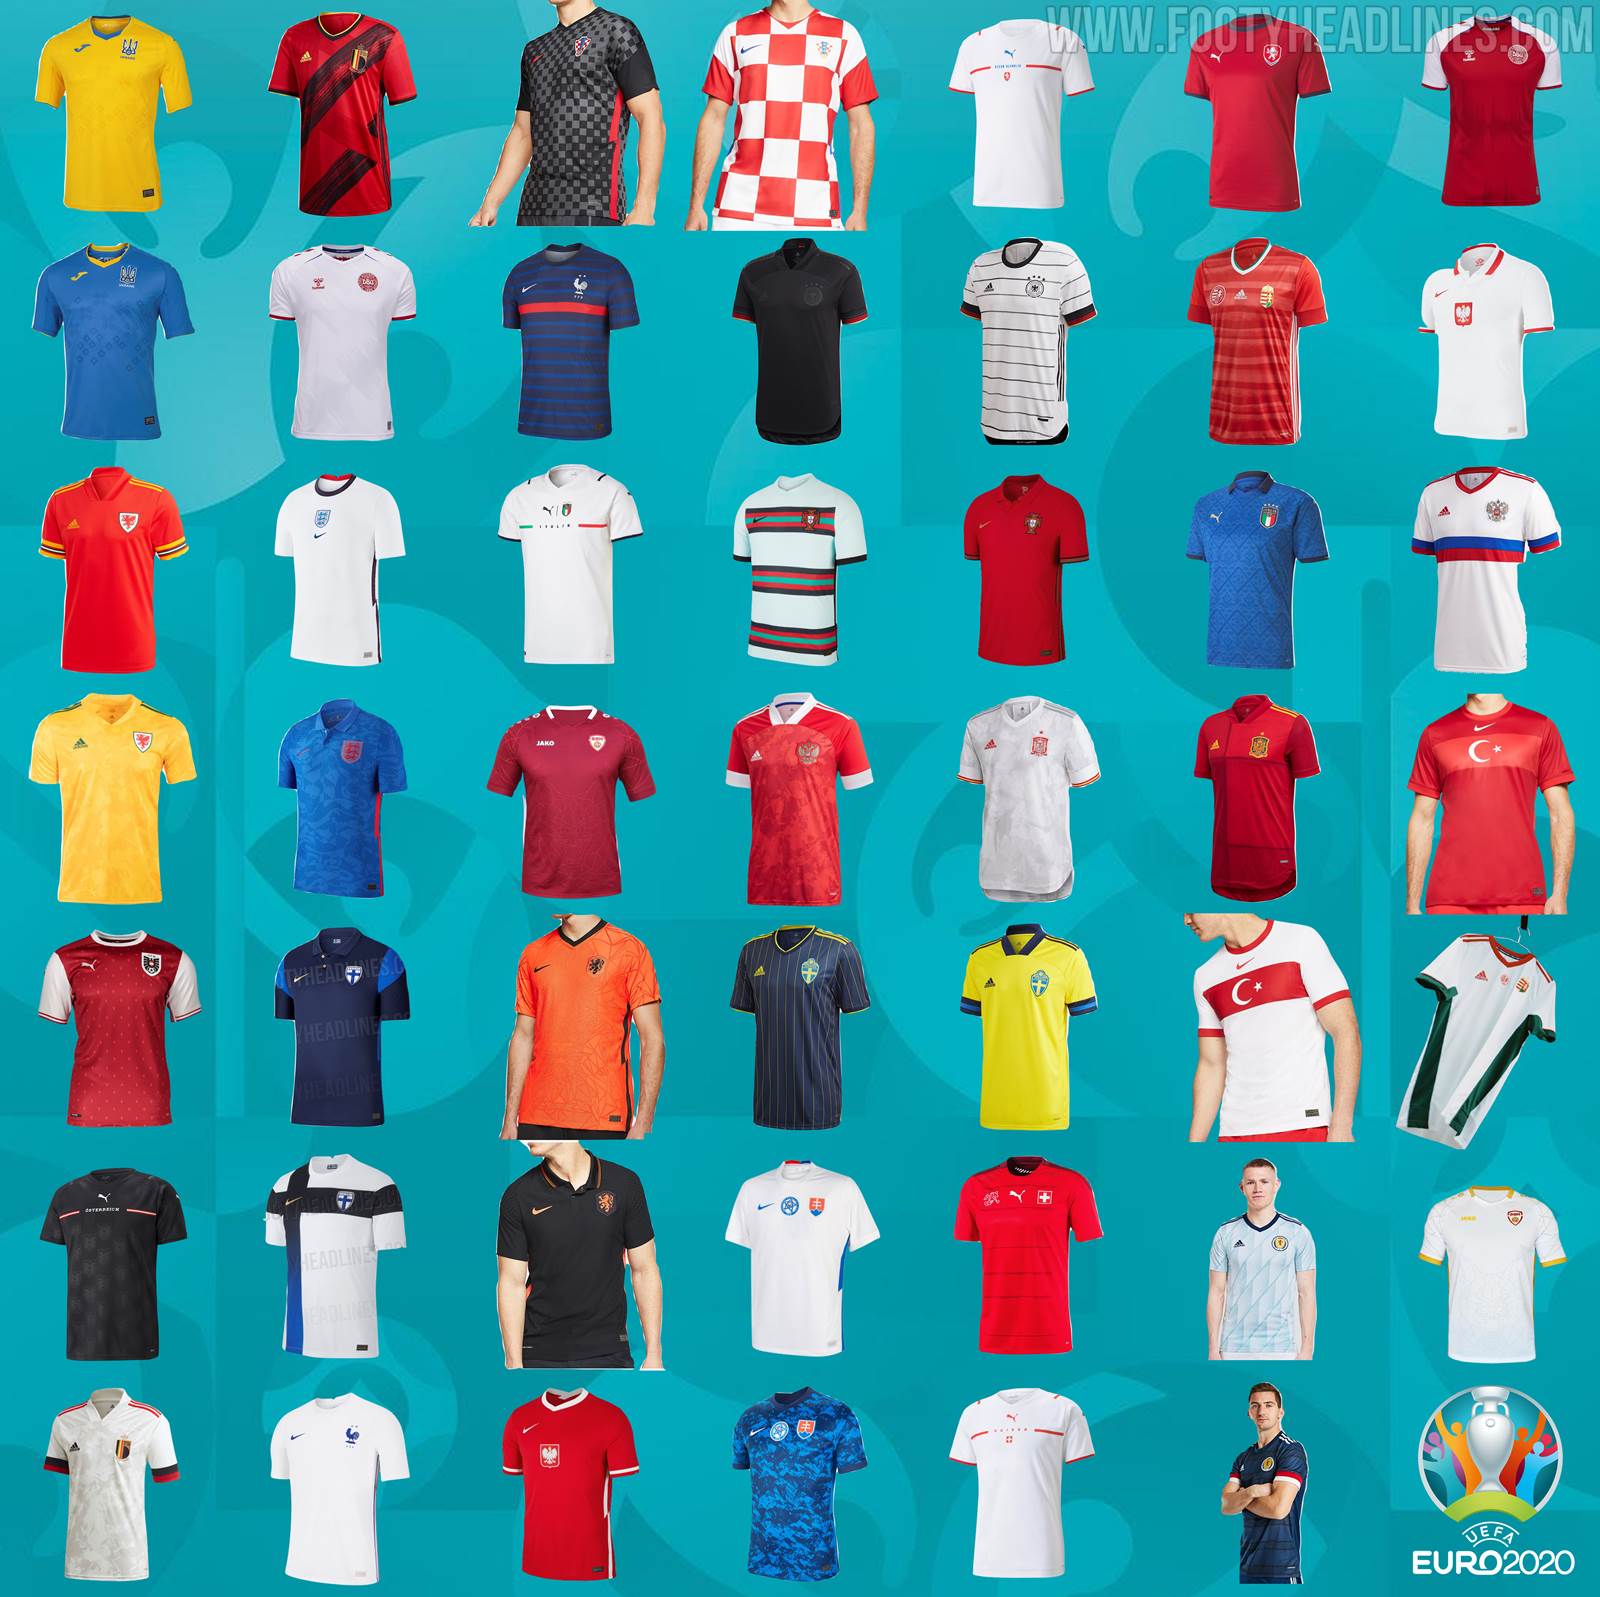 Coche Negligencia médica A nueve Euro 2020 Kit Overview - All 24 Team's Kits - Footy Headlines